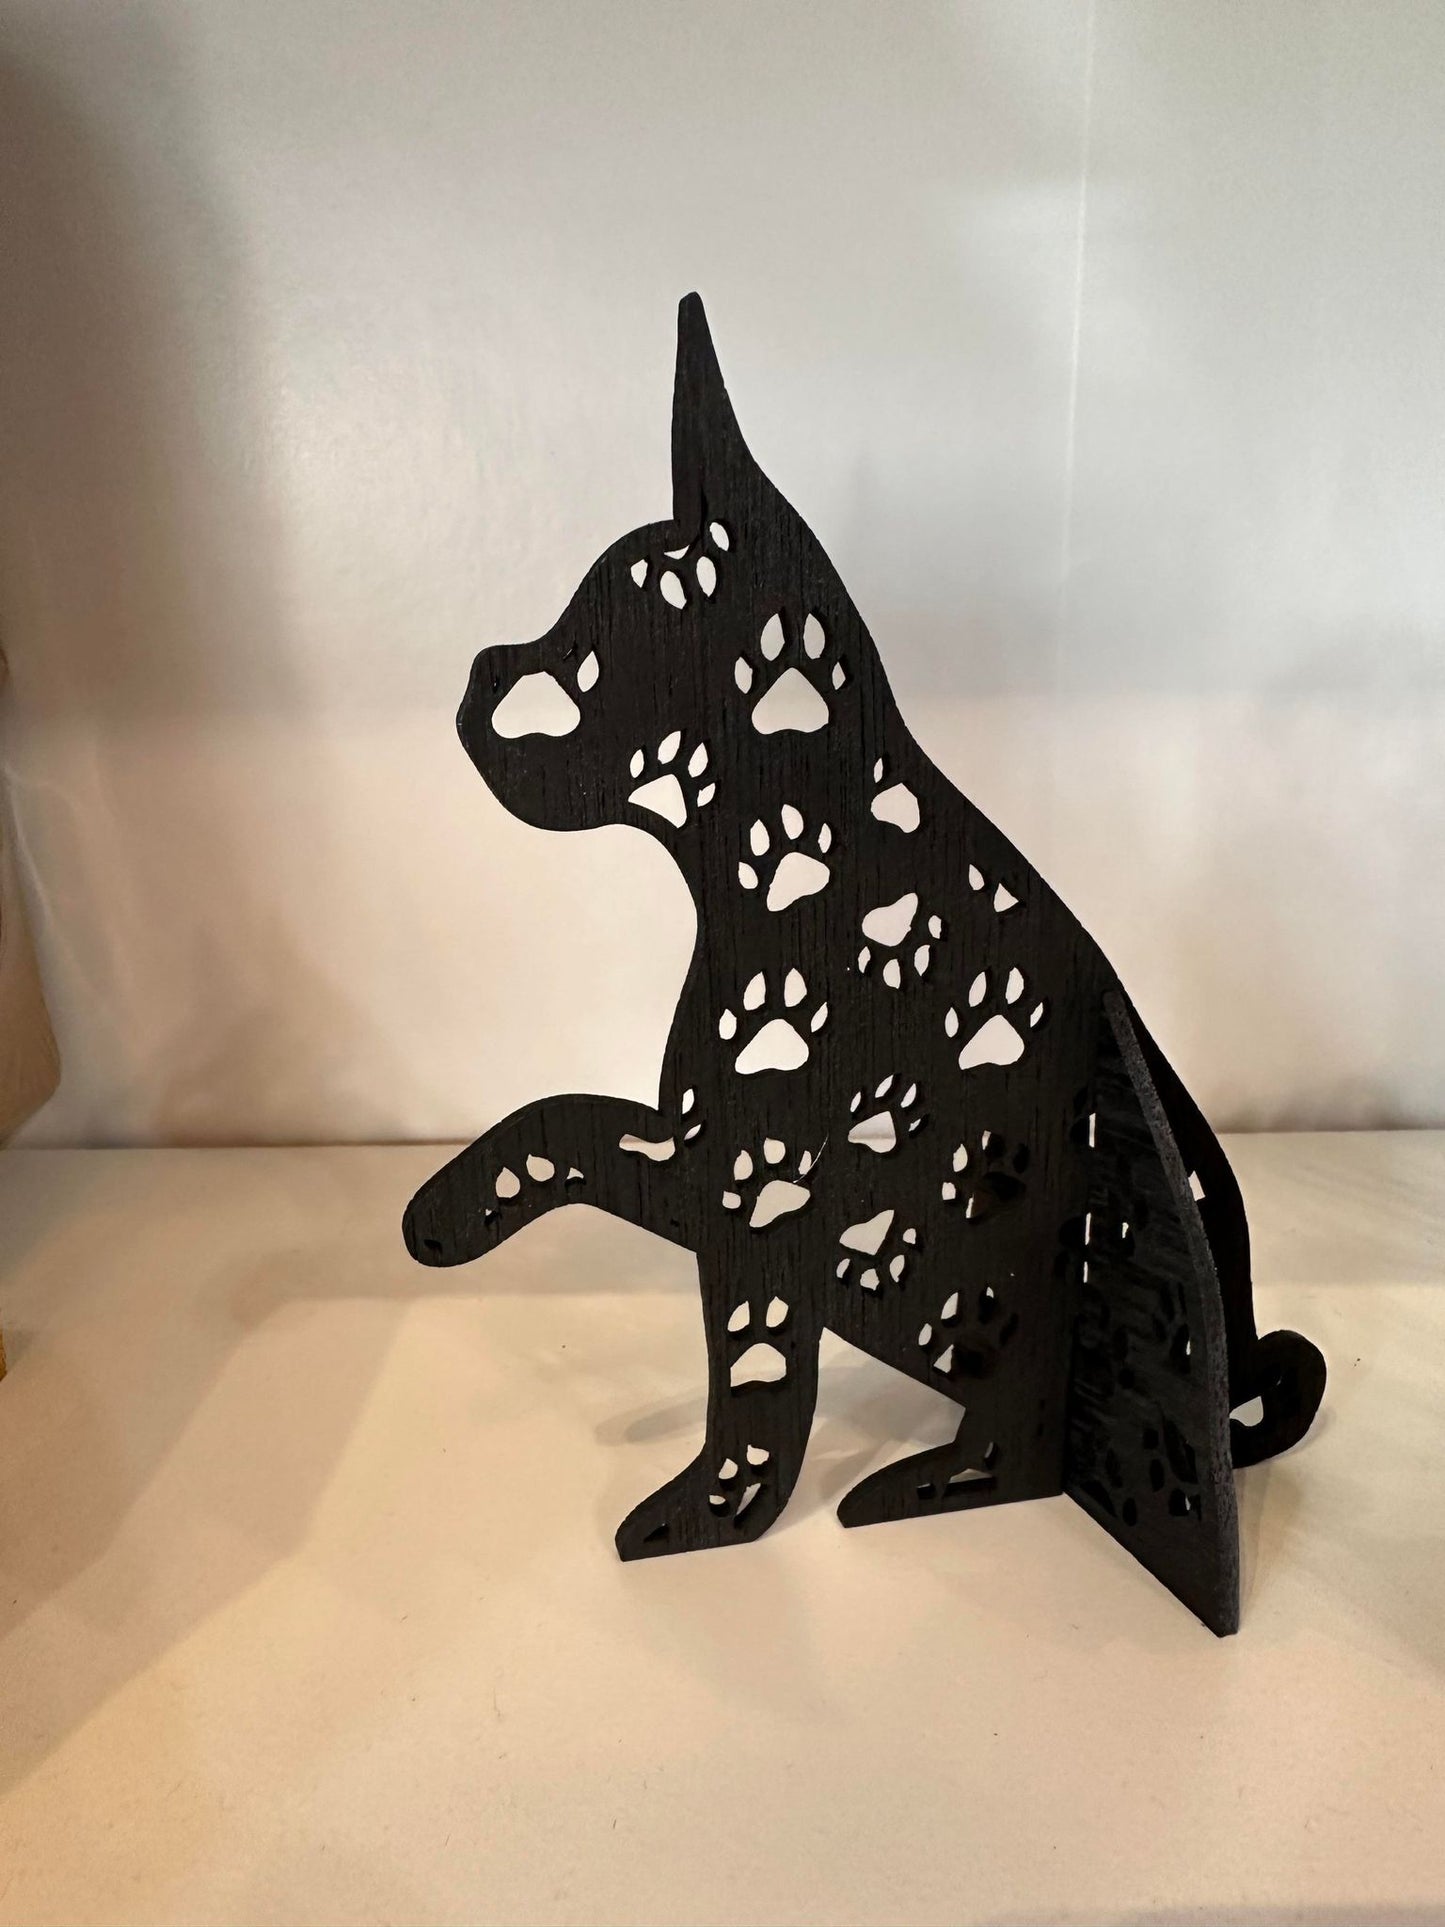 3D Decorative Dog Set of 3